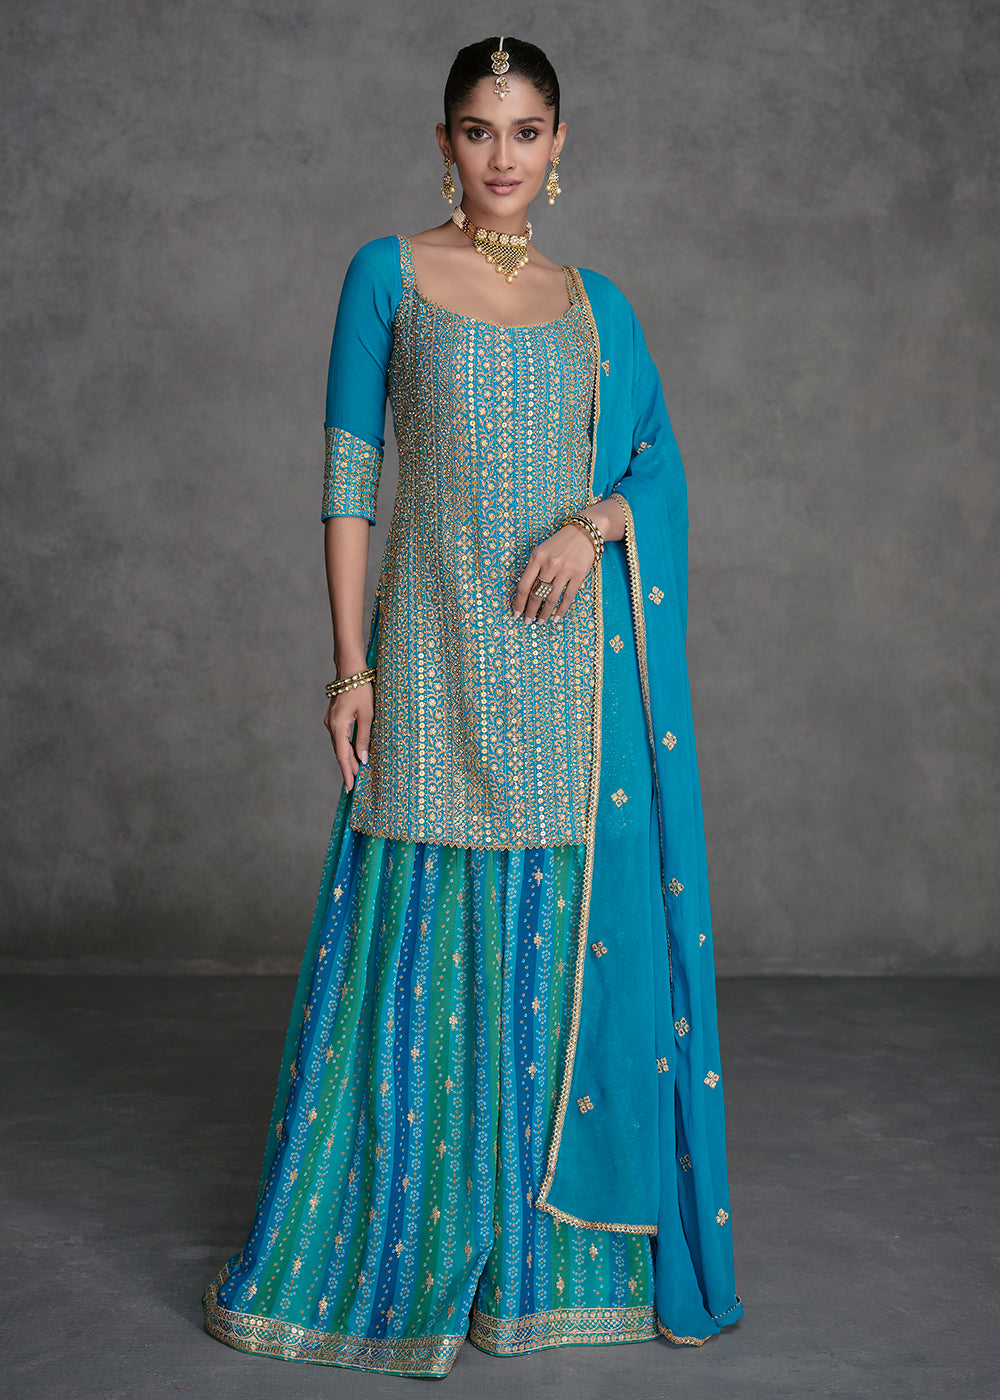 Buy latest designer sharara salwar kameez online| Buy sharara salwar suit  online| | Sharara designs, Stylish party dresses, Indian fashion dresses